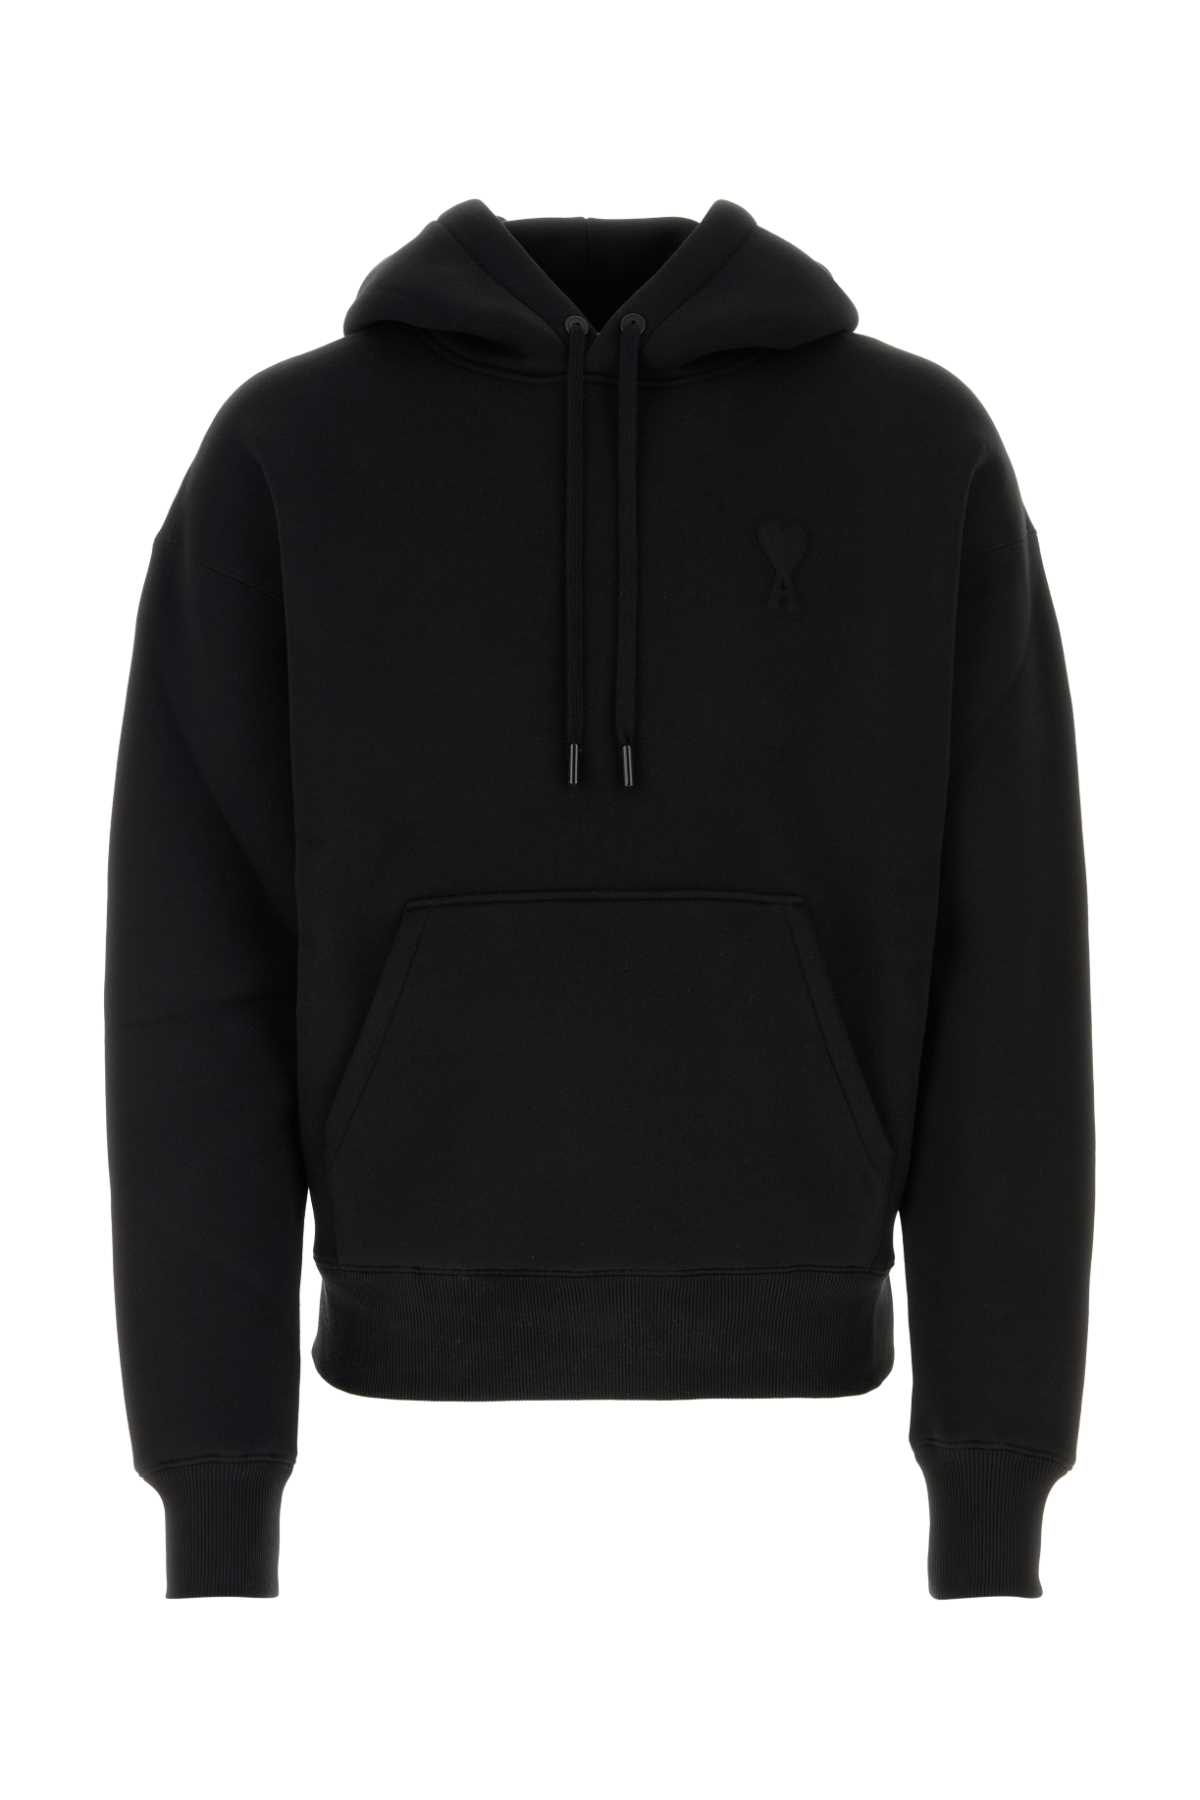 Shop Ami Alexandre Mattiussi Black Cotton Blend Sweatshirt